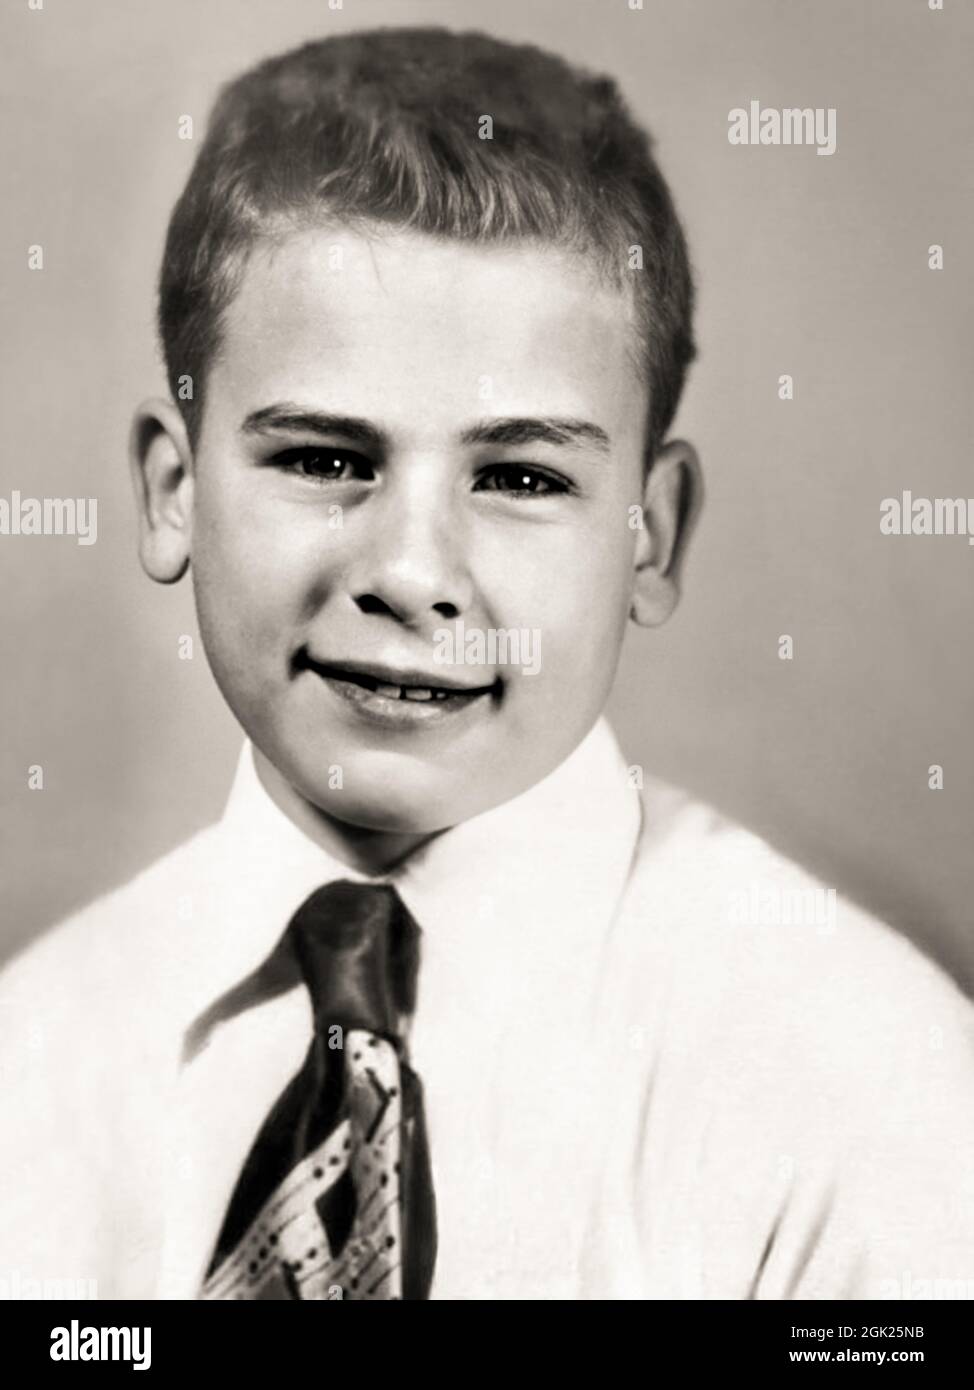 1956 c. , New York , USA : The celebrated american singer , composer , poet and actor ART GARFUNKEL ( born 5 november 1945 ) when was a young boy aged 11 . Unknown photographer. - HISTORY - FOTO STORICHE - personalità da bambino bambini da giovane - personality personalities when was young - INFANZIA - CHILDHOOD - BAMBINO  - BAMBINI - CHILDREN - CHILD - POP MUSIC - MUSICA - cantante - COMPOSITORE - ATTORE - POETA - POETRY - POESIA - tie - cravatta - smile - sorriso --- ARCHIVIO GBB Stock Photo